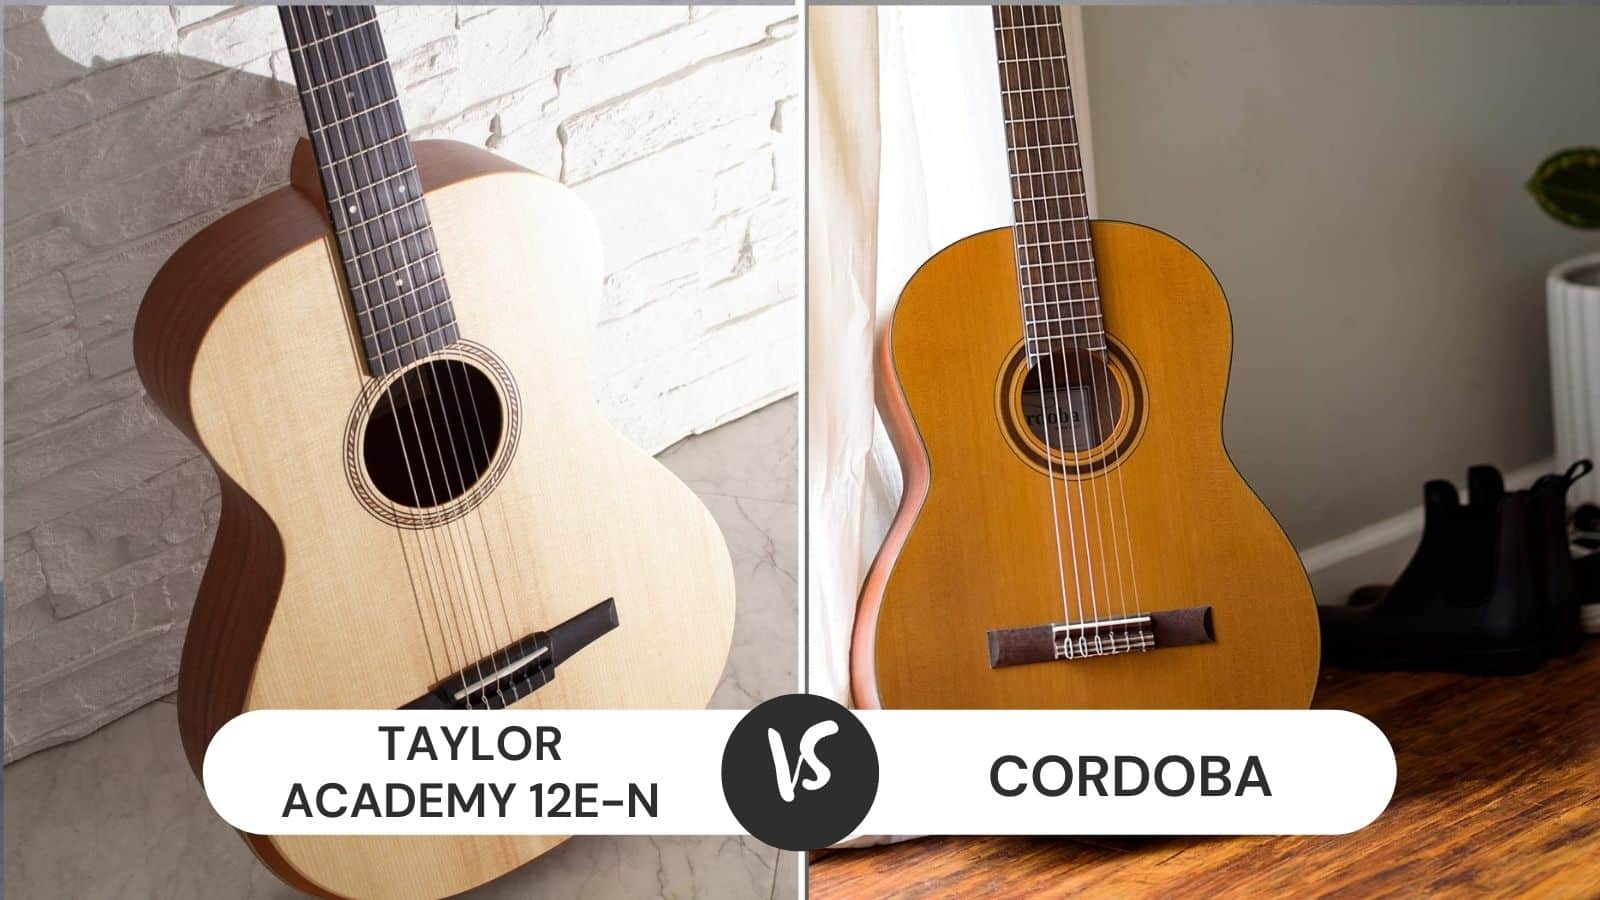 Taylor Academy 12e-N vs Cordoba